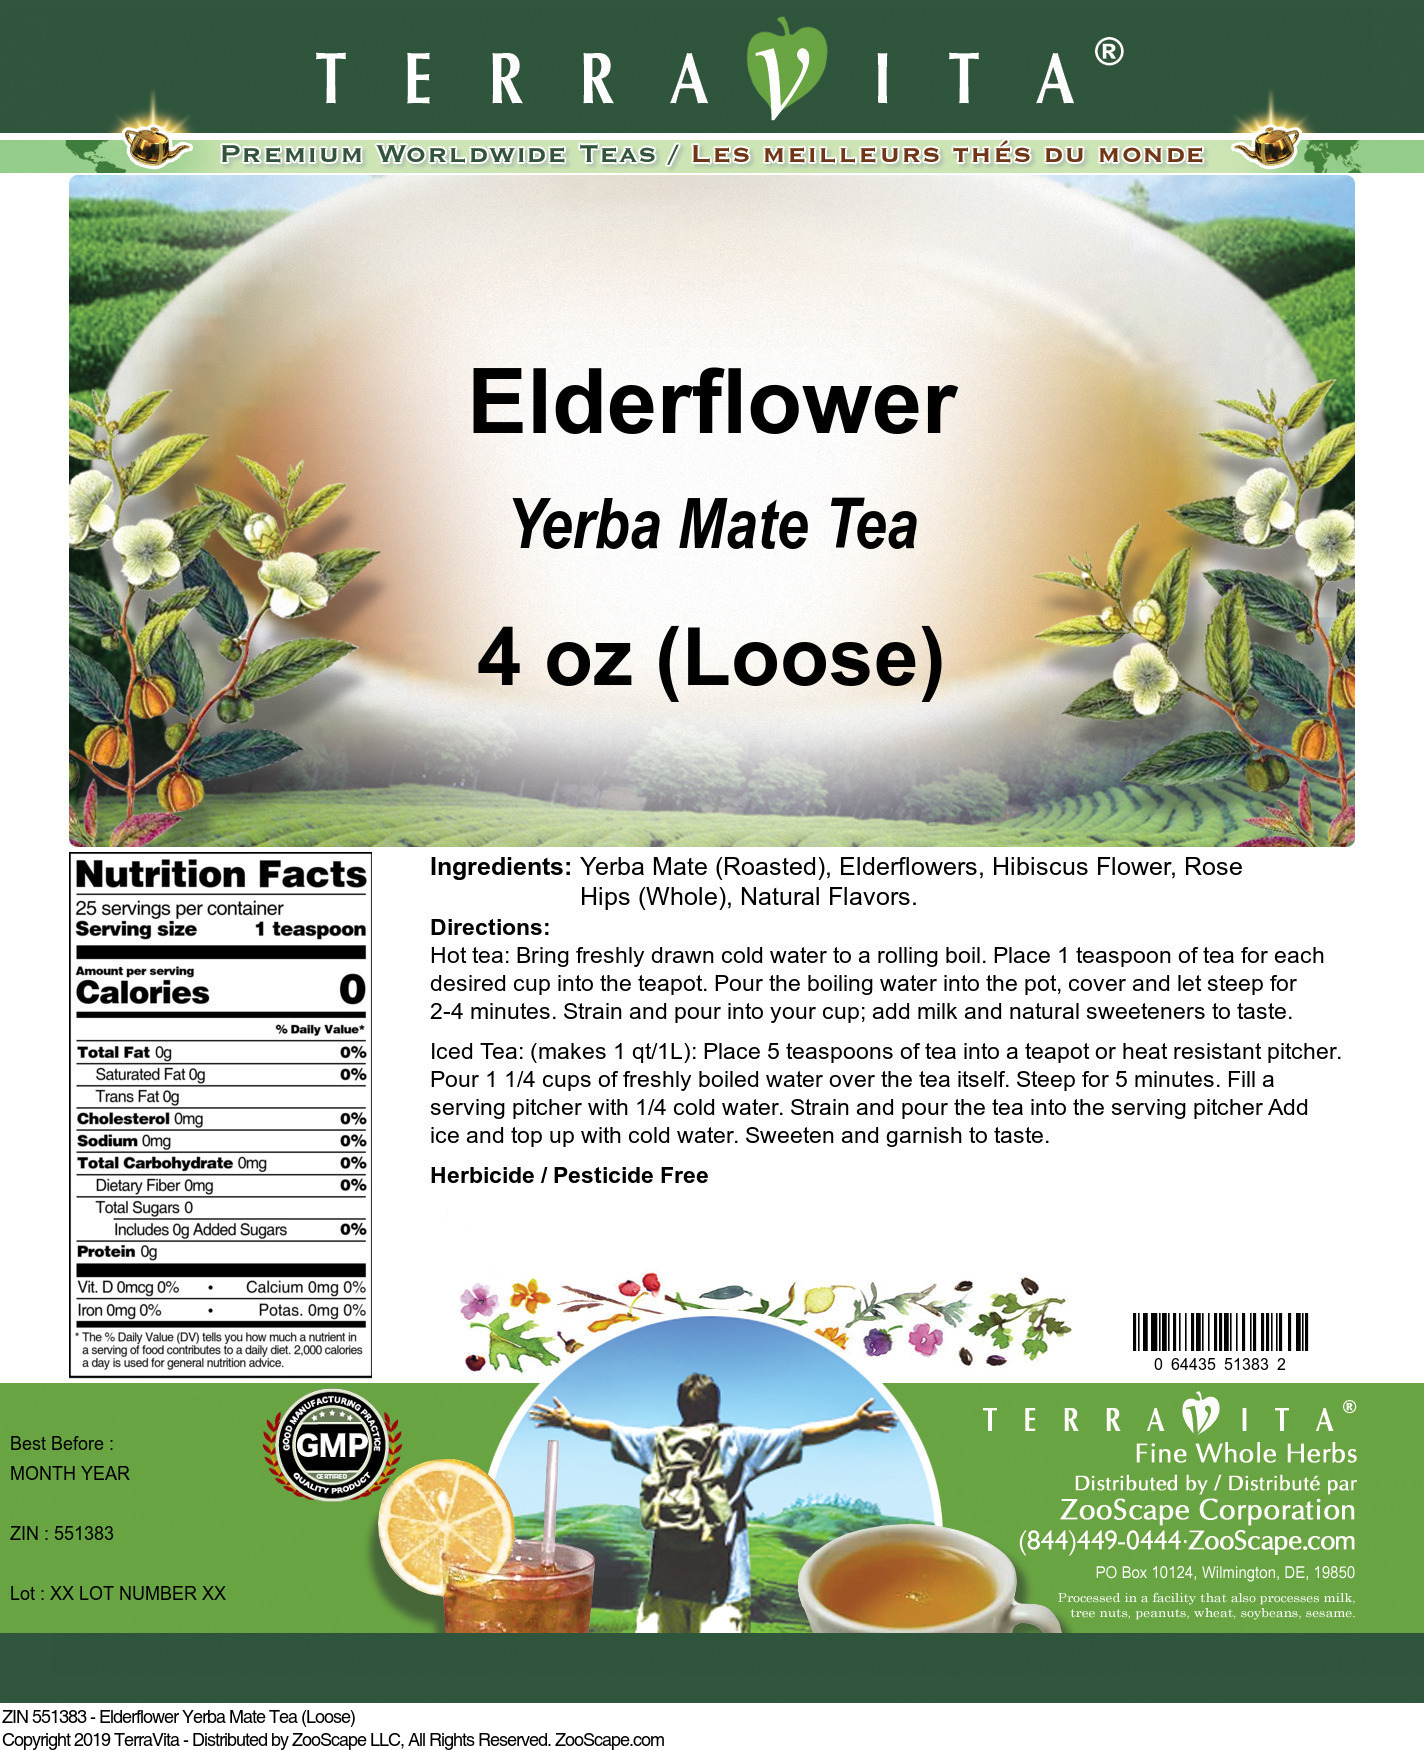 Elderflower Yerba Mate Tea (Loose) - Label